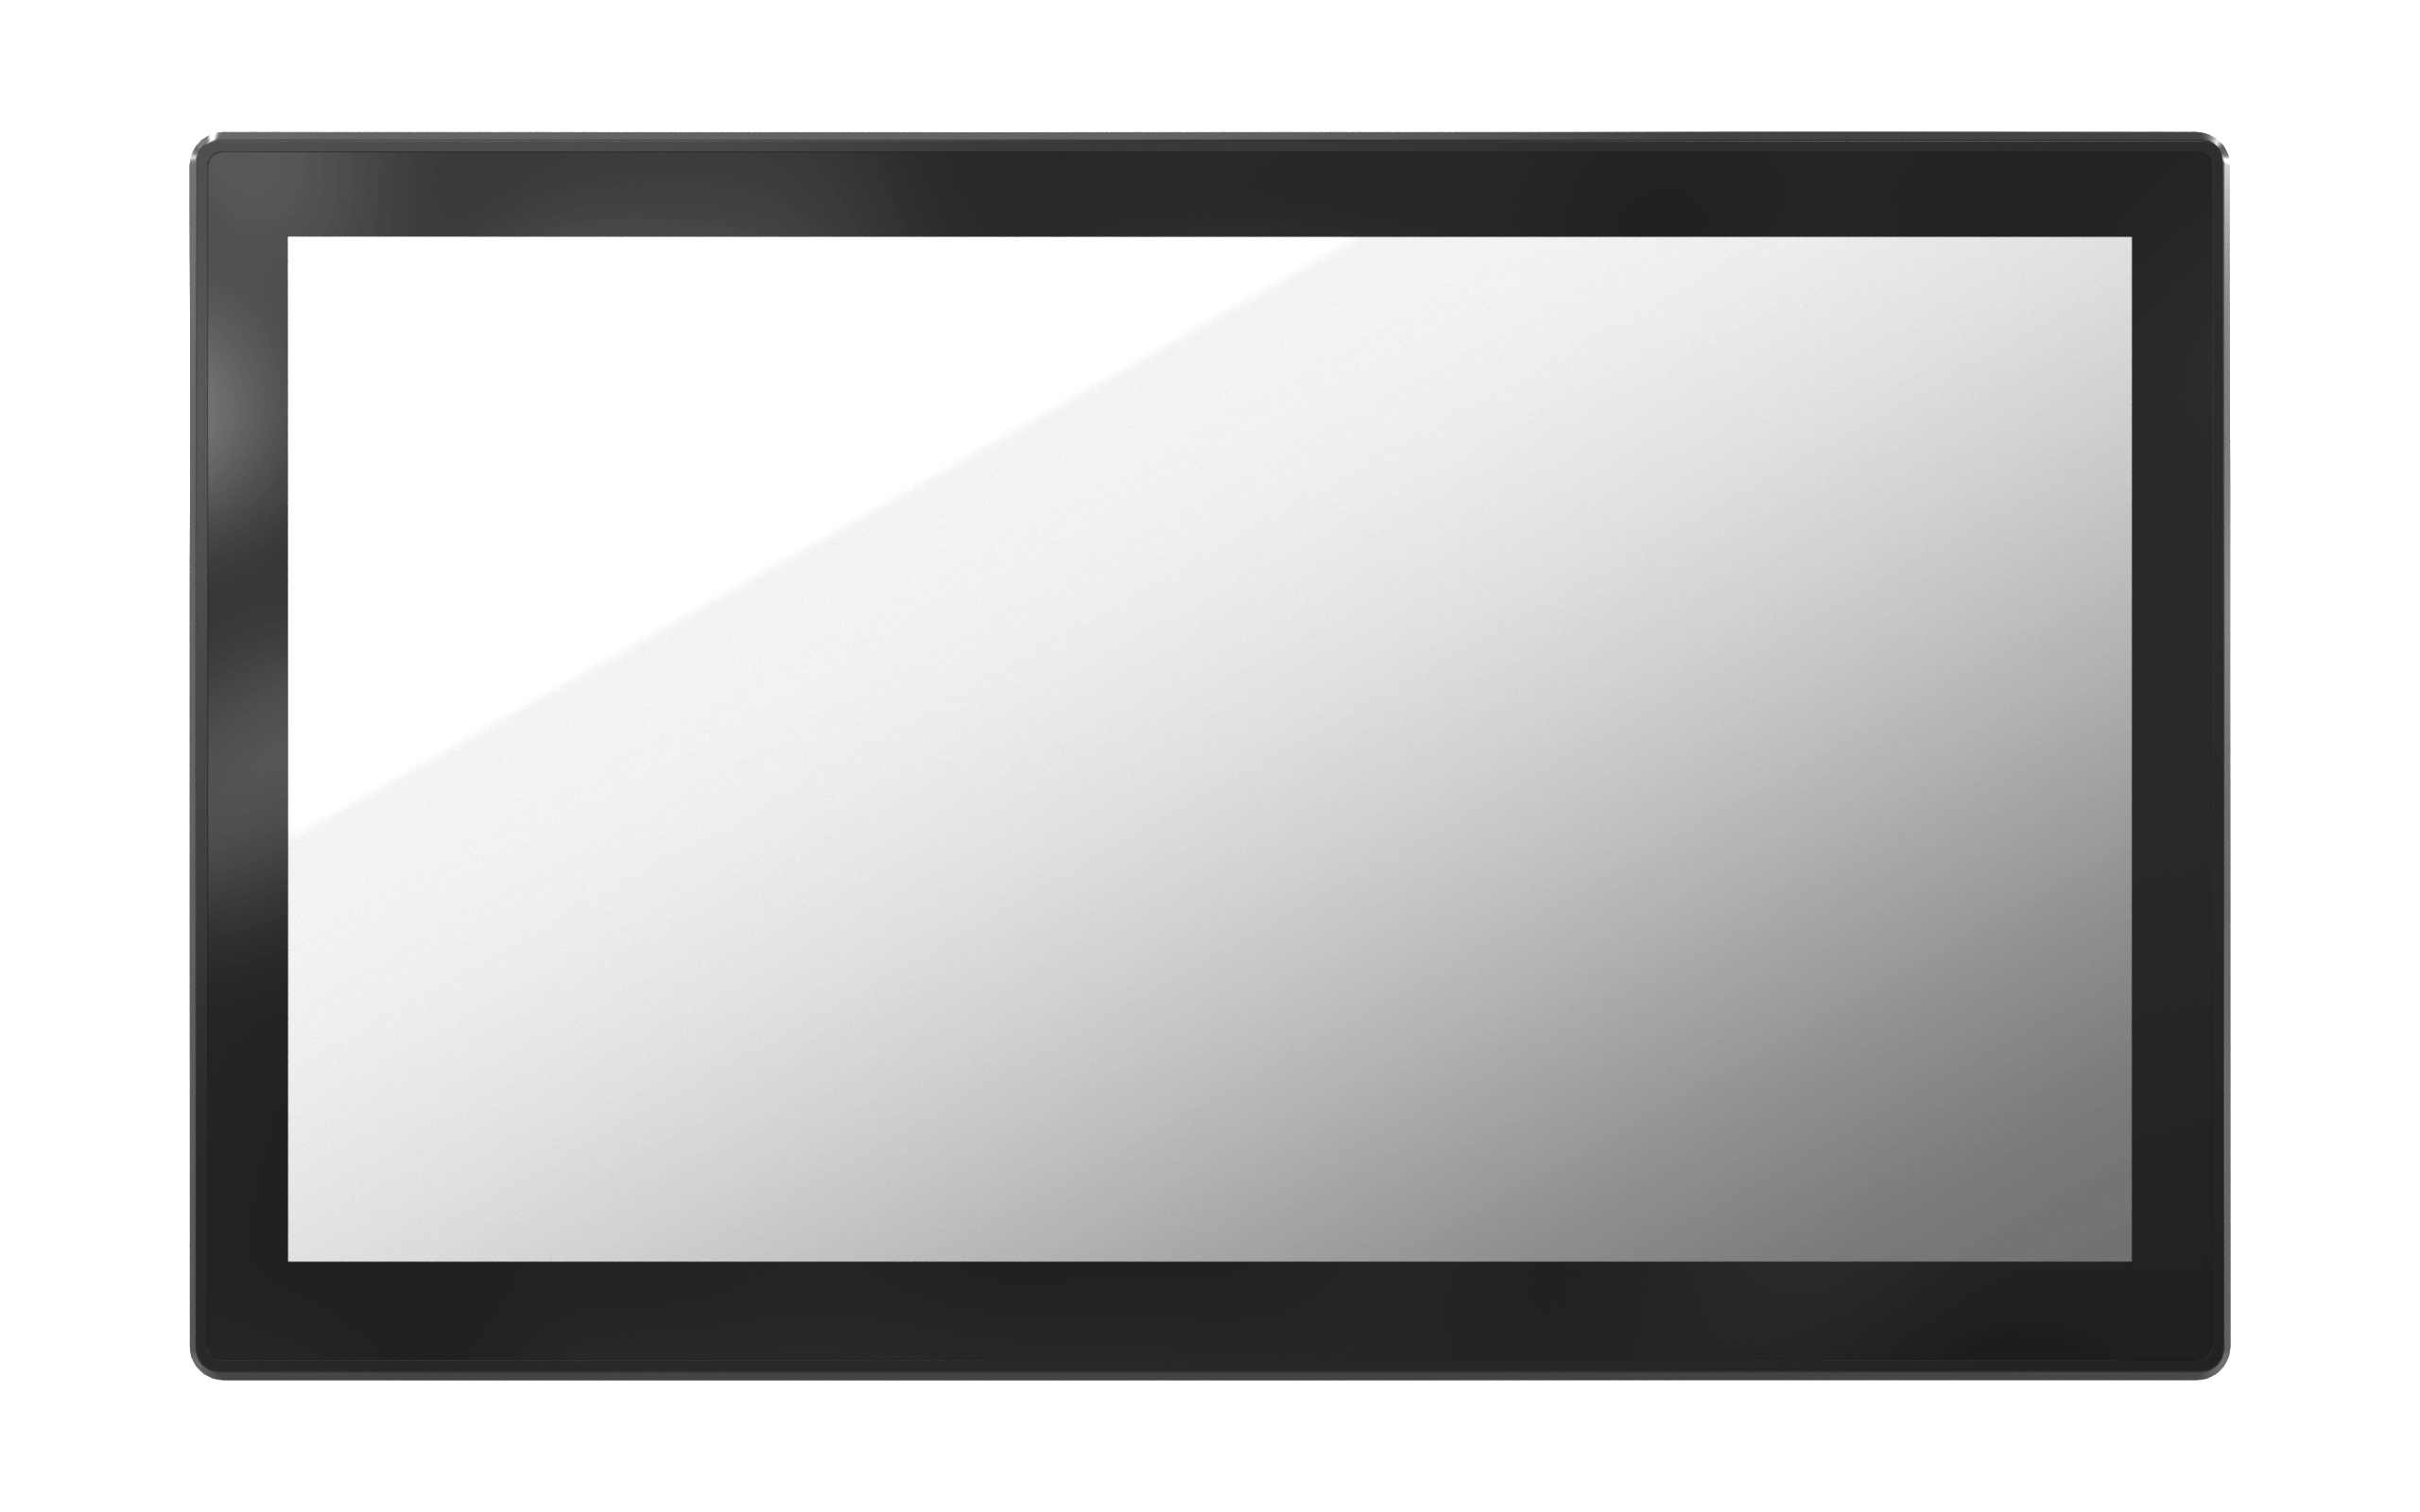 VIO-W224-MX100H 24" 16:9 IP65 Industrial Touchscreen Monitor